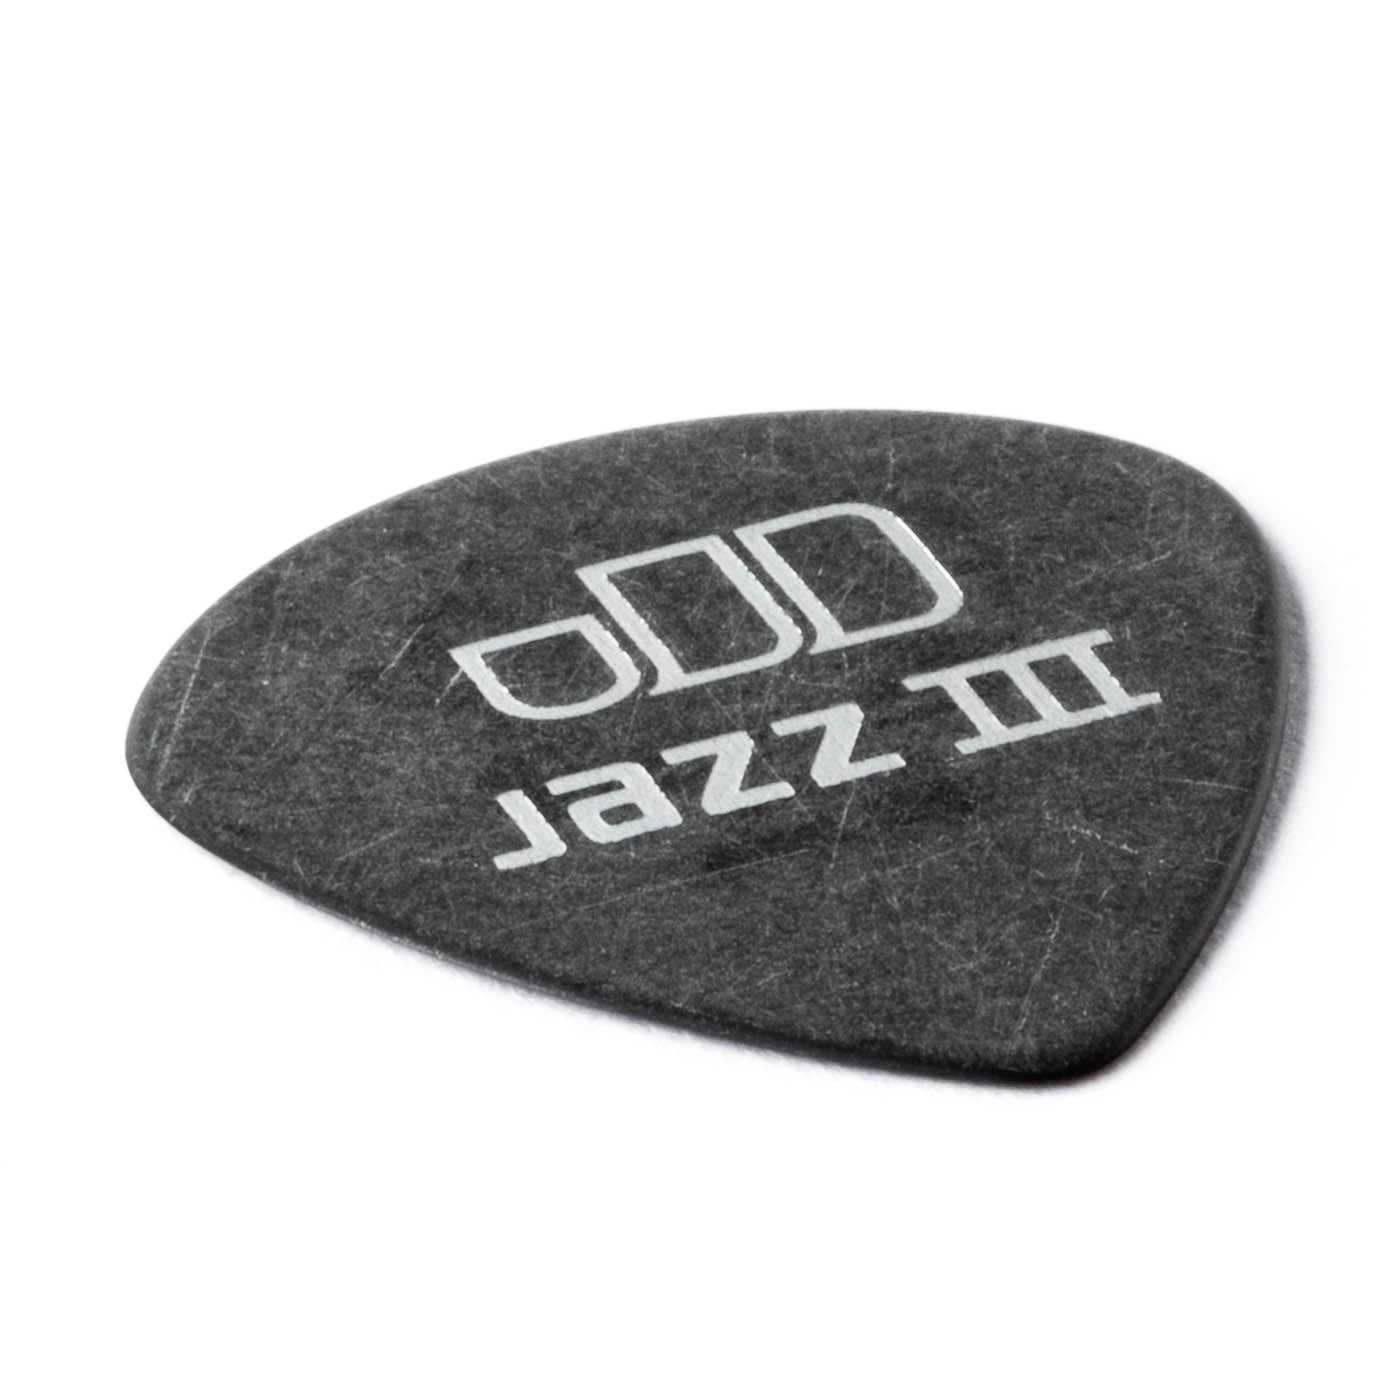 Dunlop 482 Tortex® Pitch Black Jazz III Pick,  0.88MM